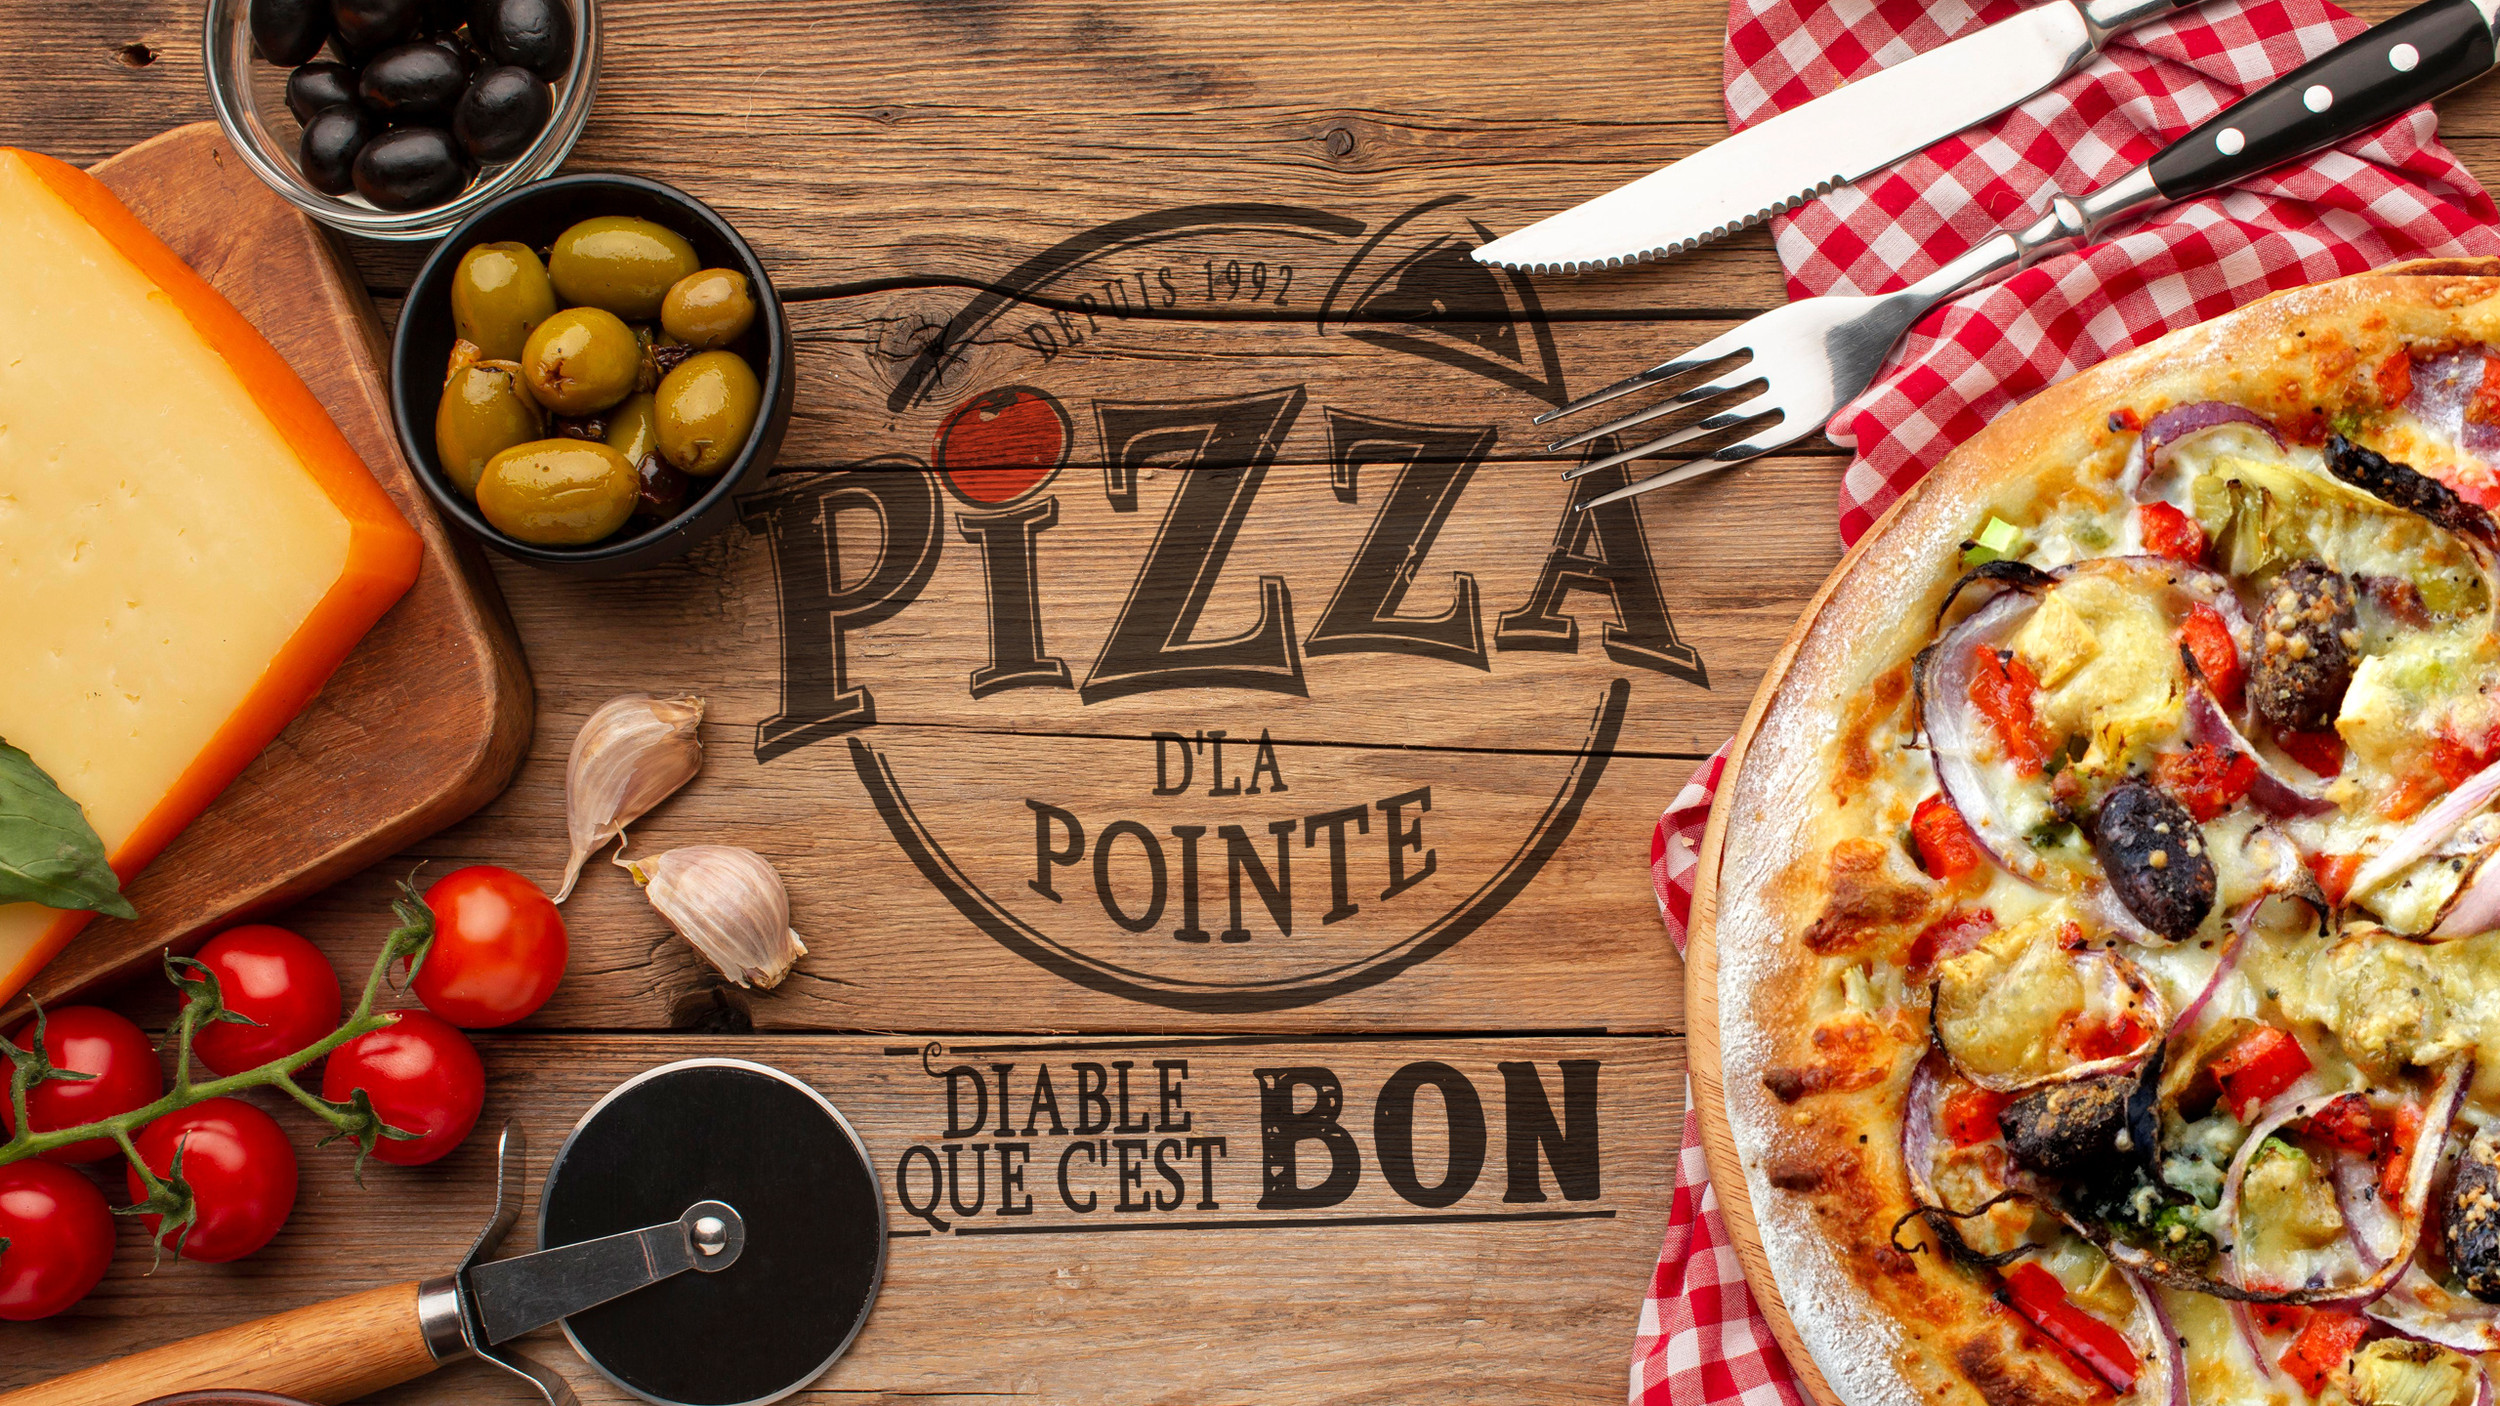 Pizza D'LA Pointe - Pizzeria